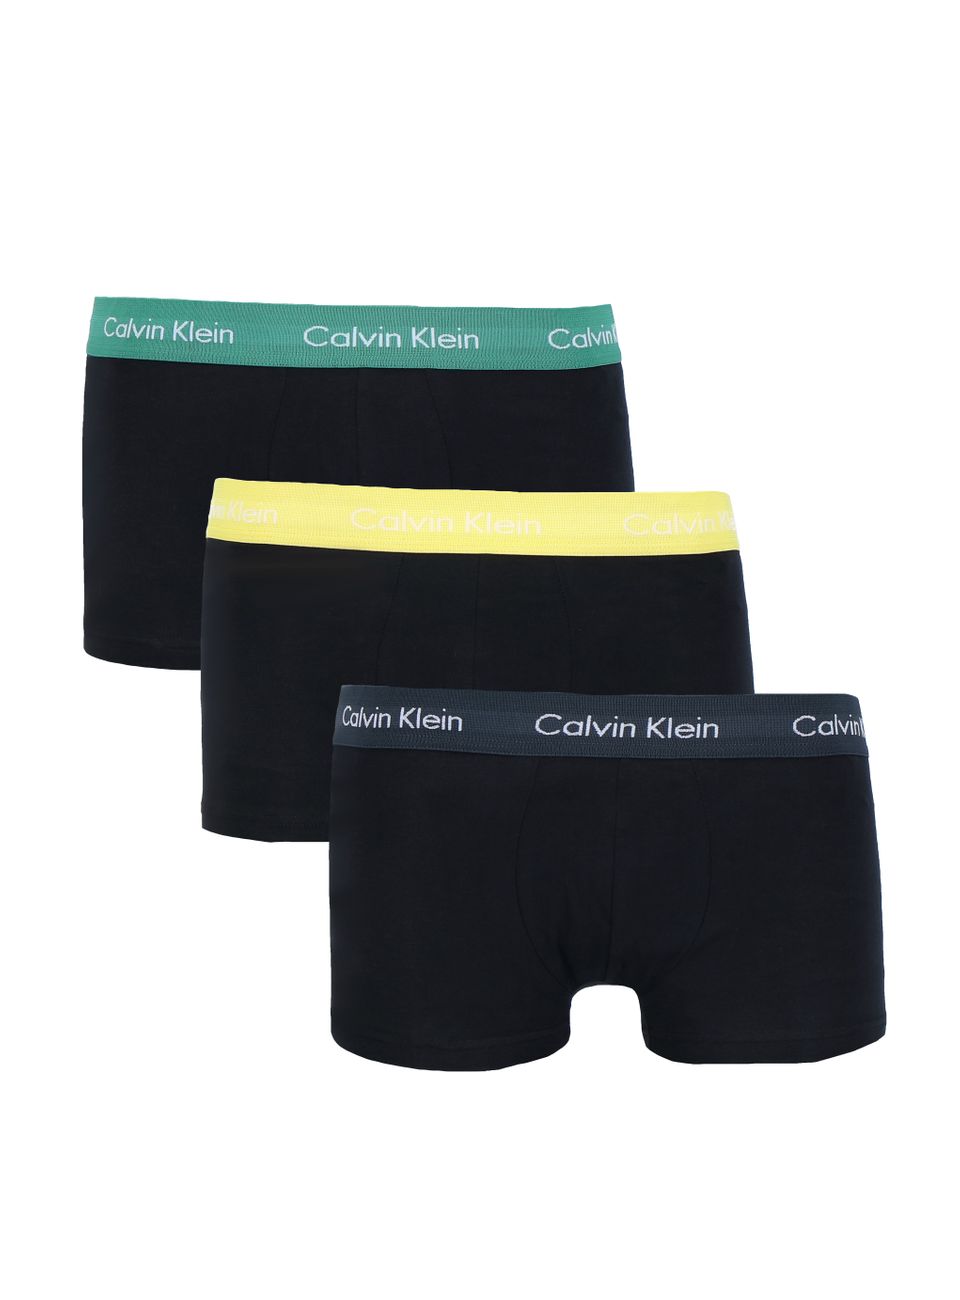 CALVIN KLEIN LOW RISE TRUNK 3er Pack Herren Boxershorts - Calvin Klein - SAGATOO - 8720107564534